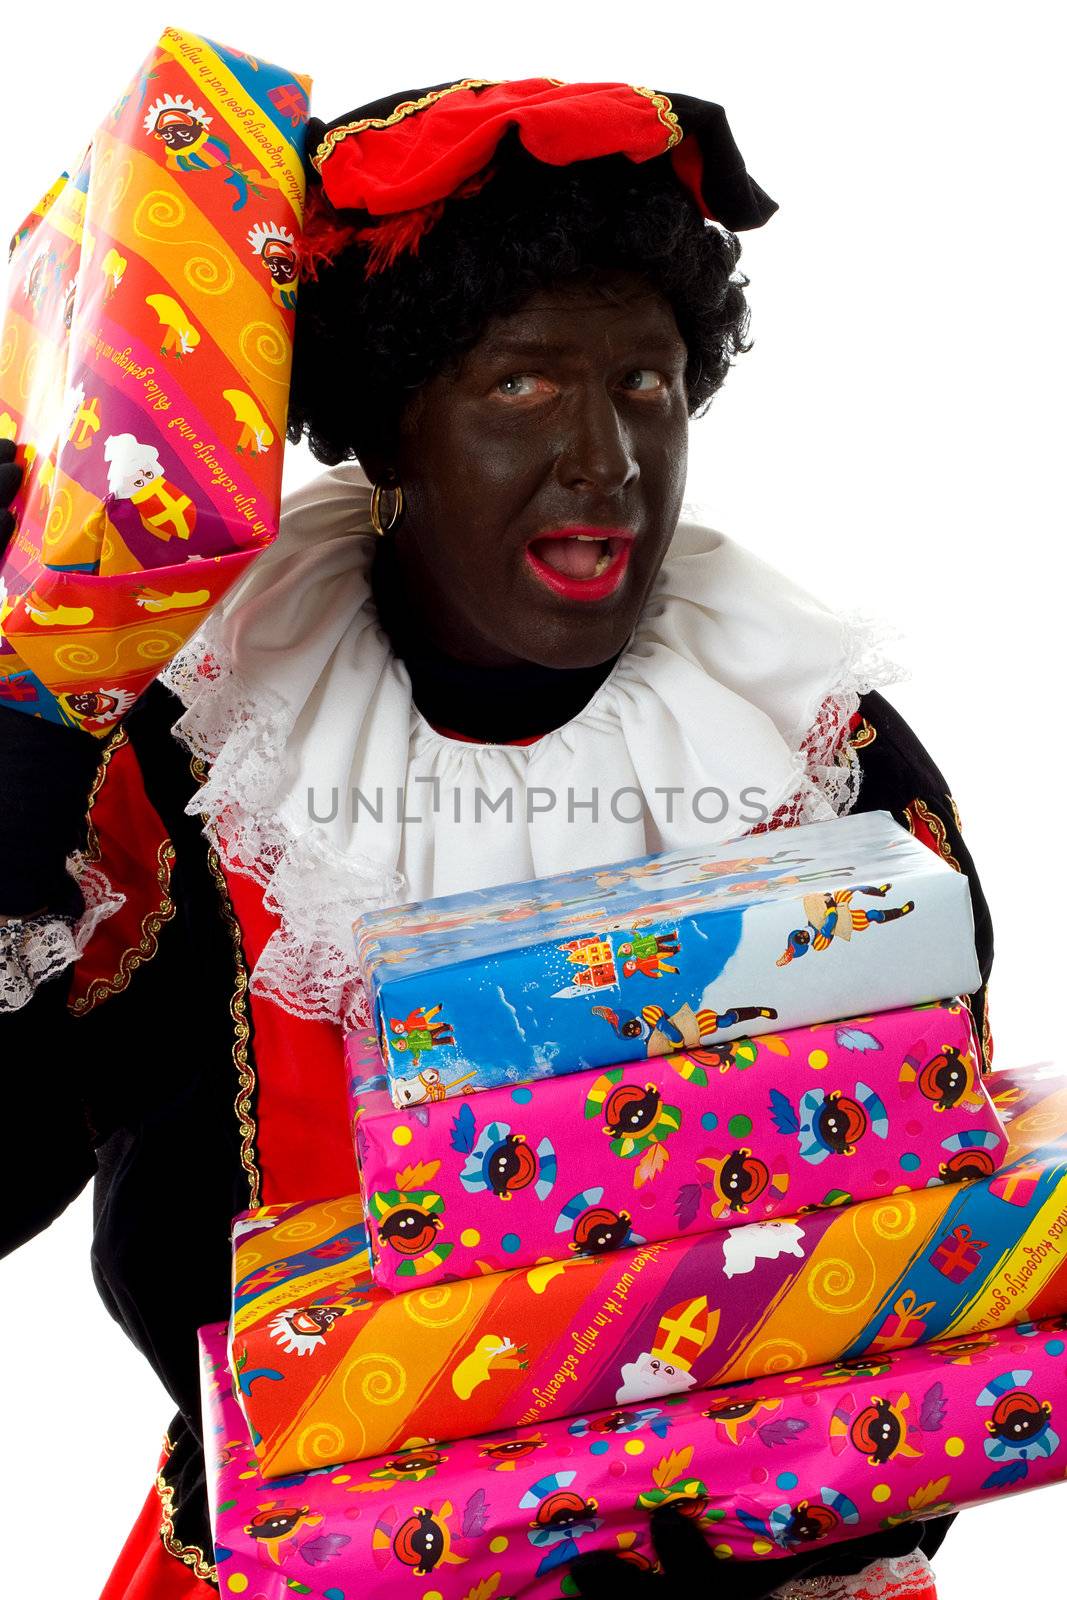 Zwarte Piet ( black pete) typical dutch character with presents by sannie32